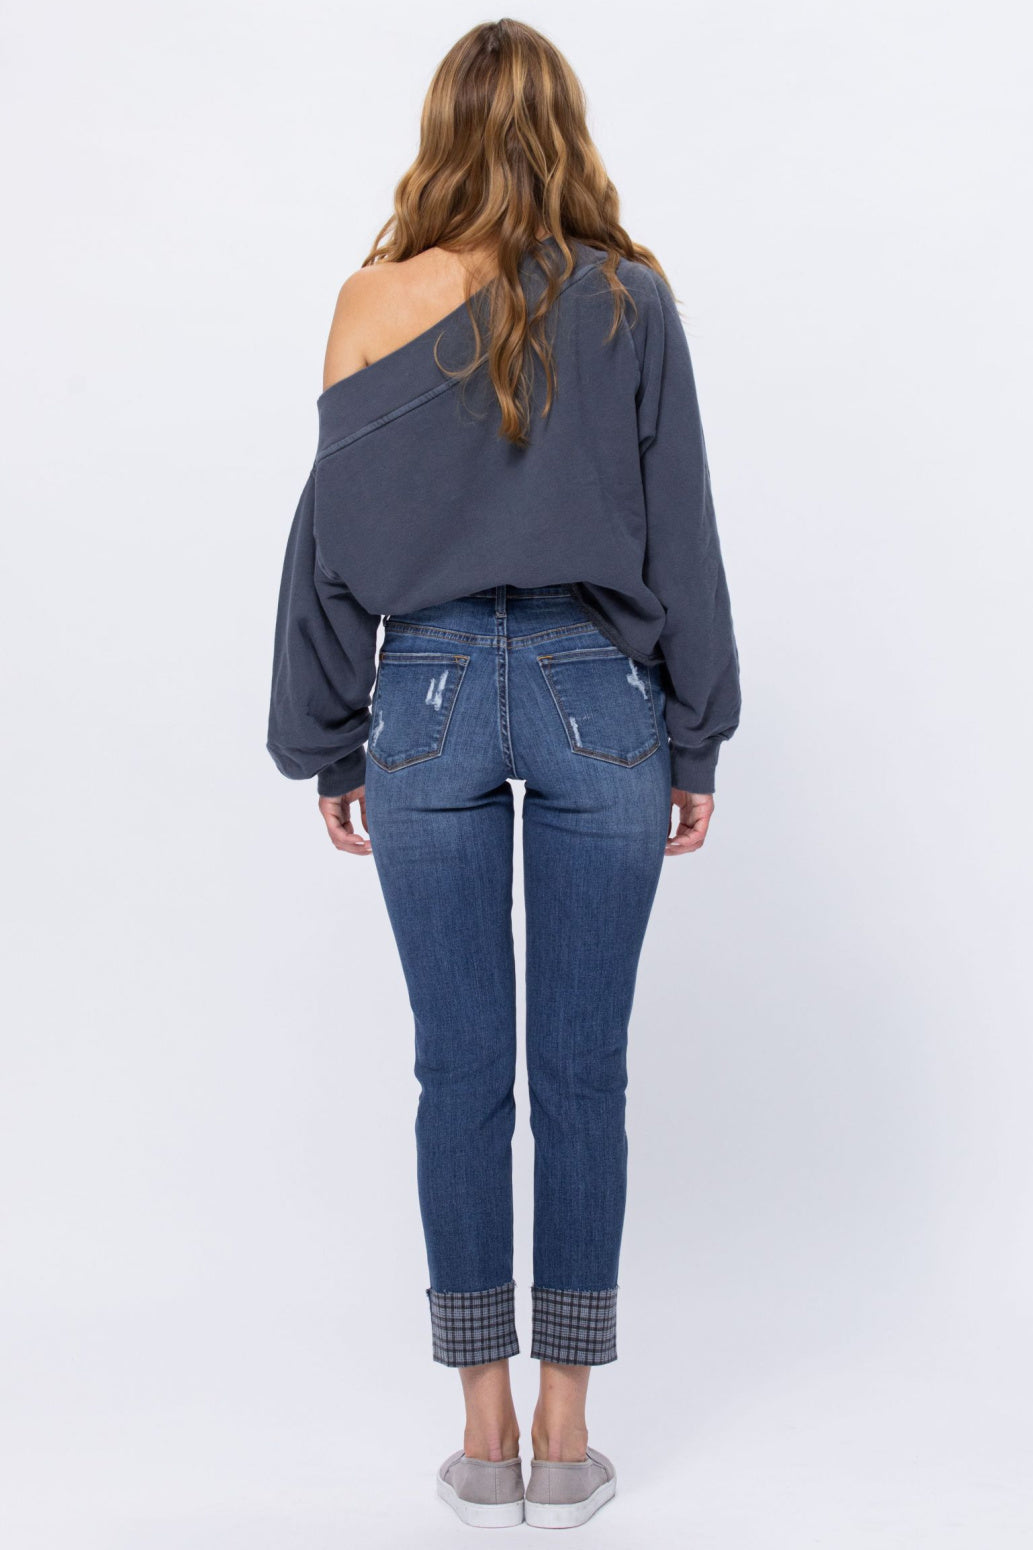 Judy Blue Grey Plaid Cuffed Slim Fit Mid Rise Jeans Style 88358